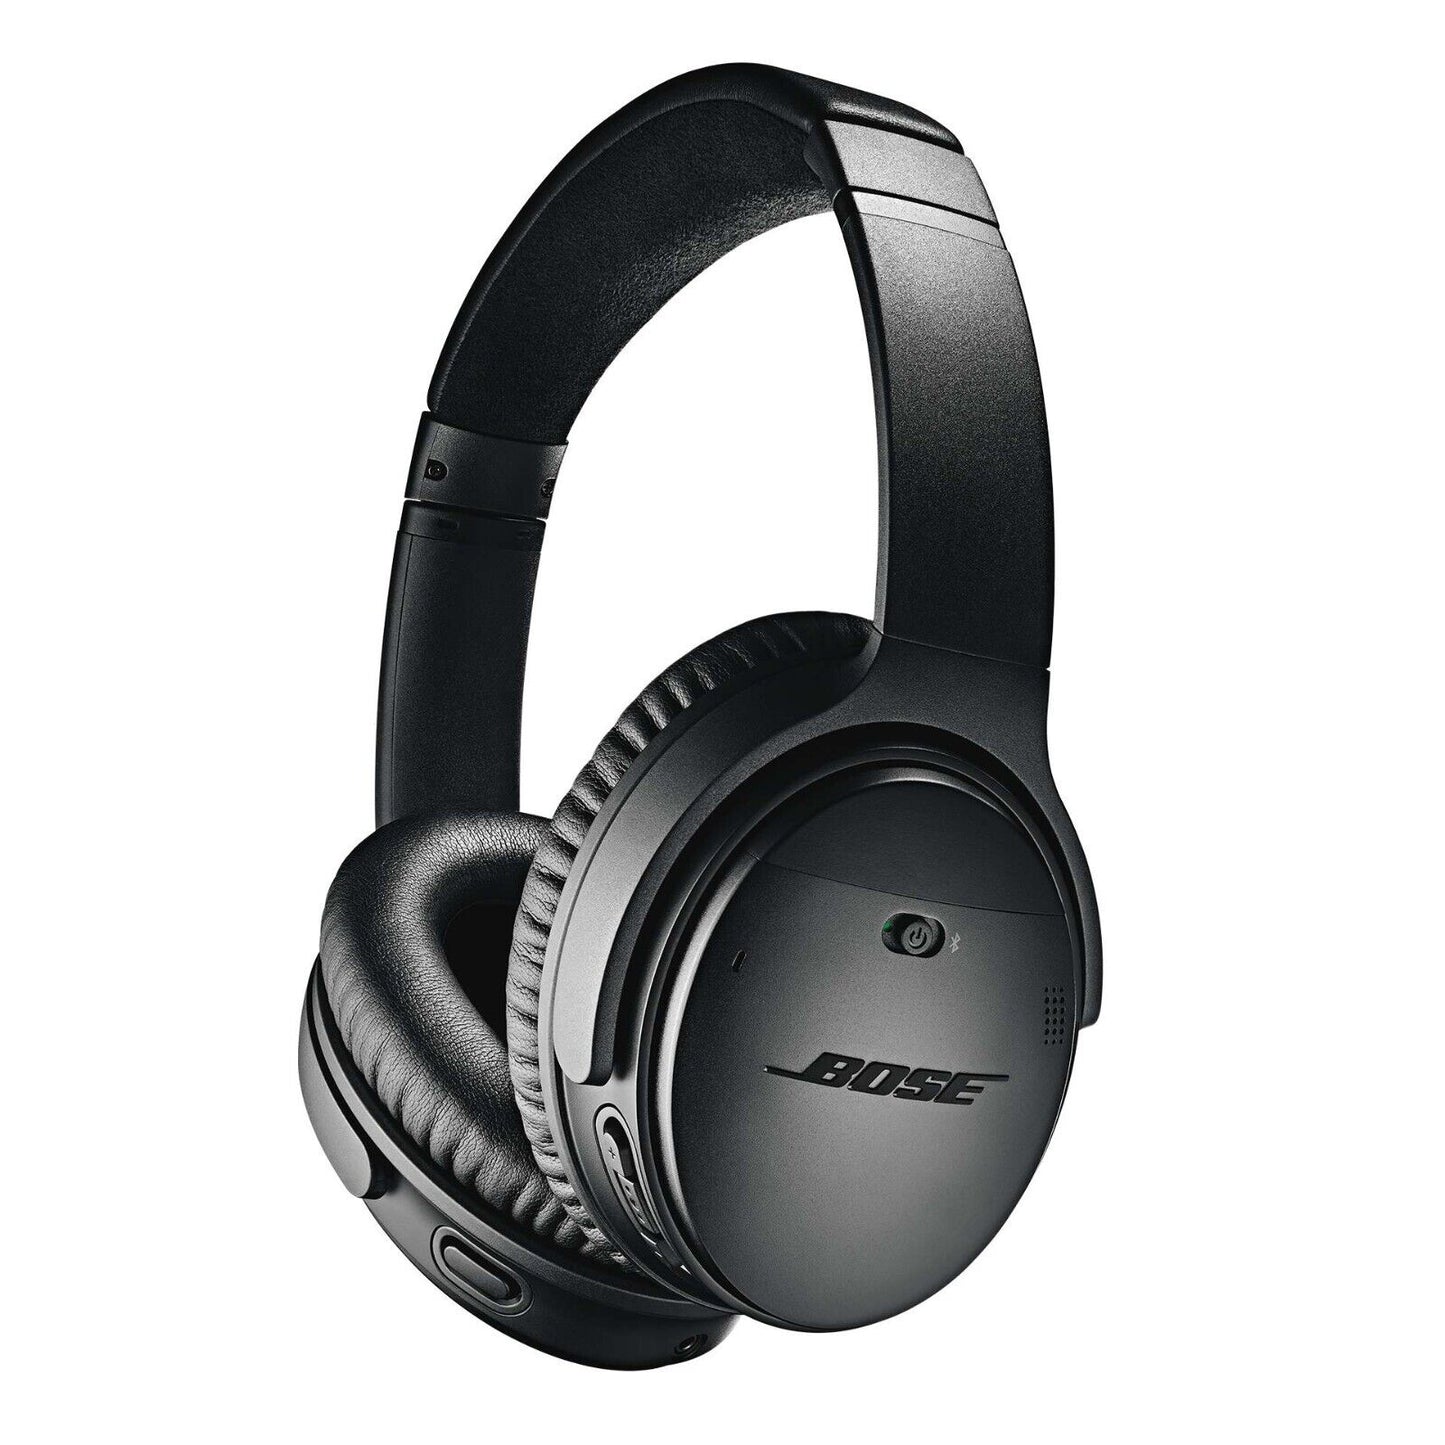 Bose QC2 / QC25 / QC35 I II Noise Cancelling Wireless Over-the-Ear Headphones (Refurbished)